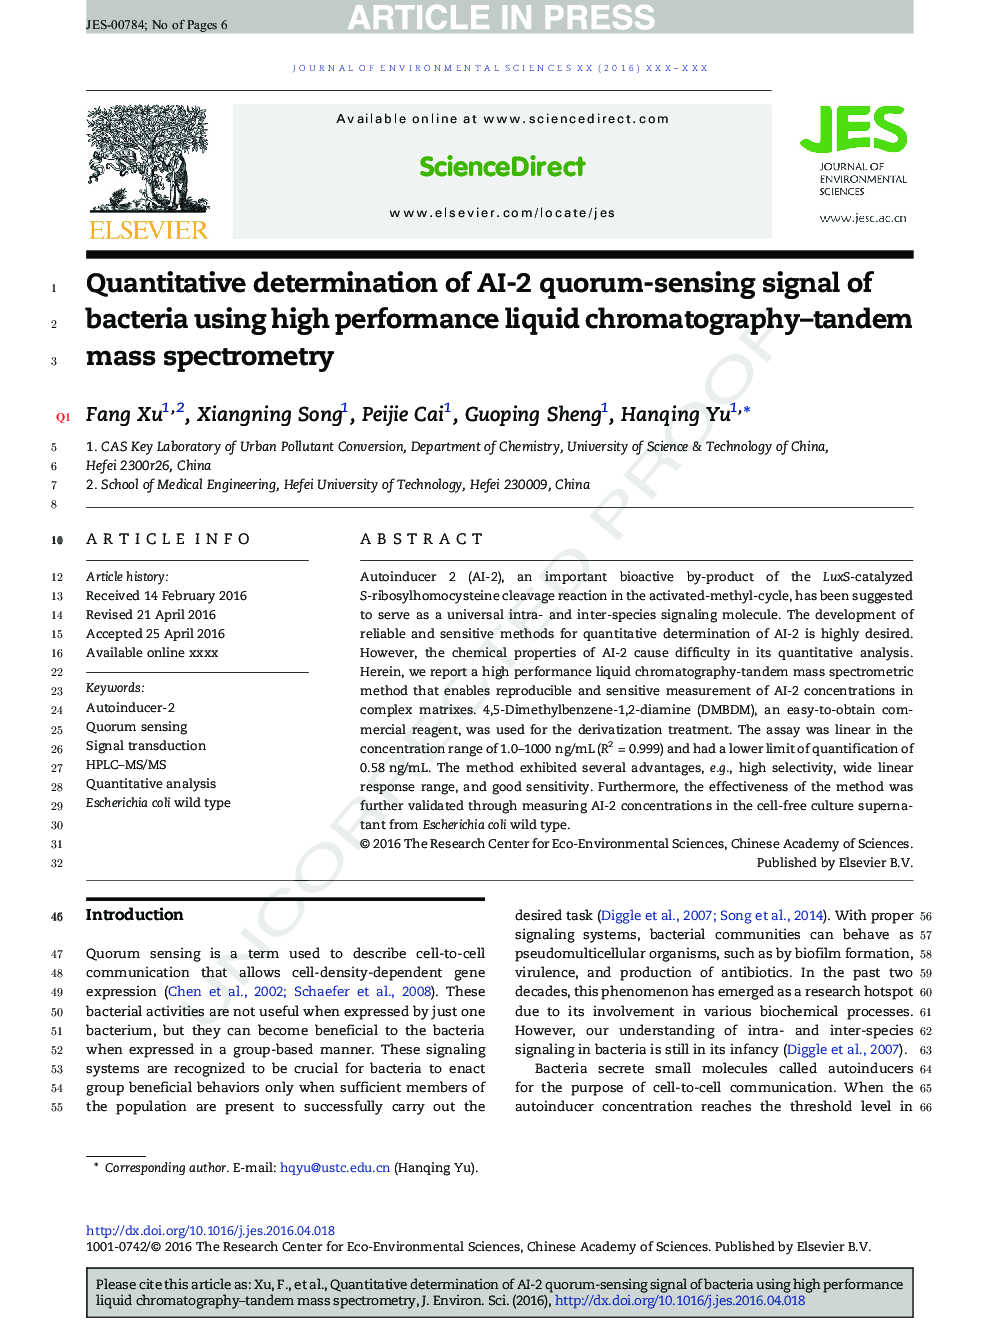 Quantitative determination of AI-2 quorum-sensing signal of bacteria using high performance liquid chromatography-tandem mass spectrometry